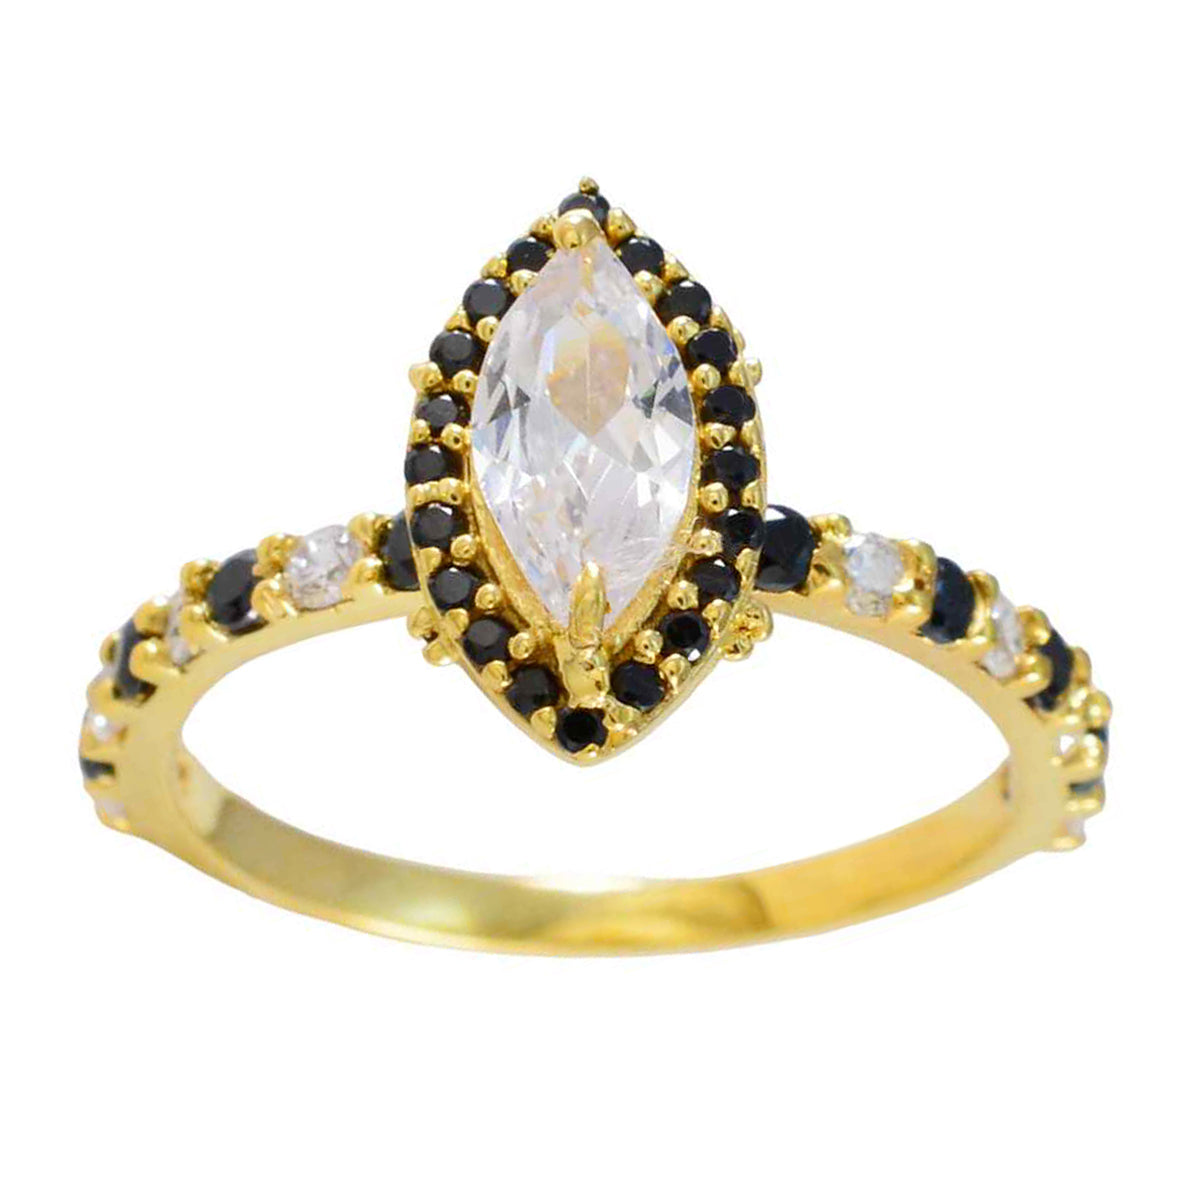 Anillo de plata magnífico riyo con chapado en oro amarillo, piedra de zafiro azul, ajuste de punta en forma de marquesa, anillo de compromiso de joyería antigua